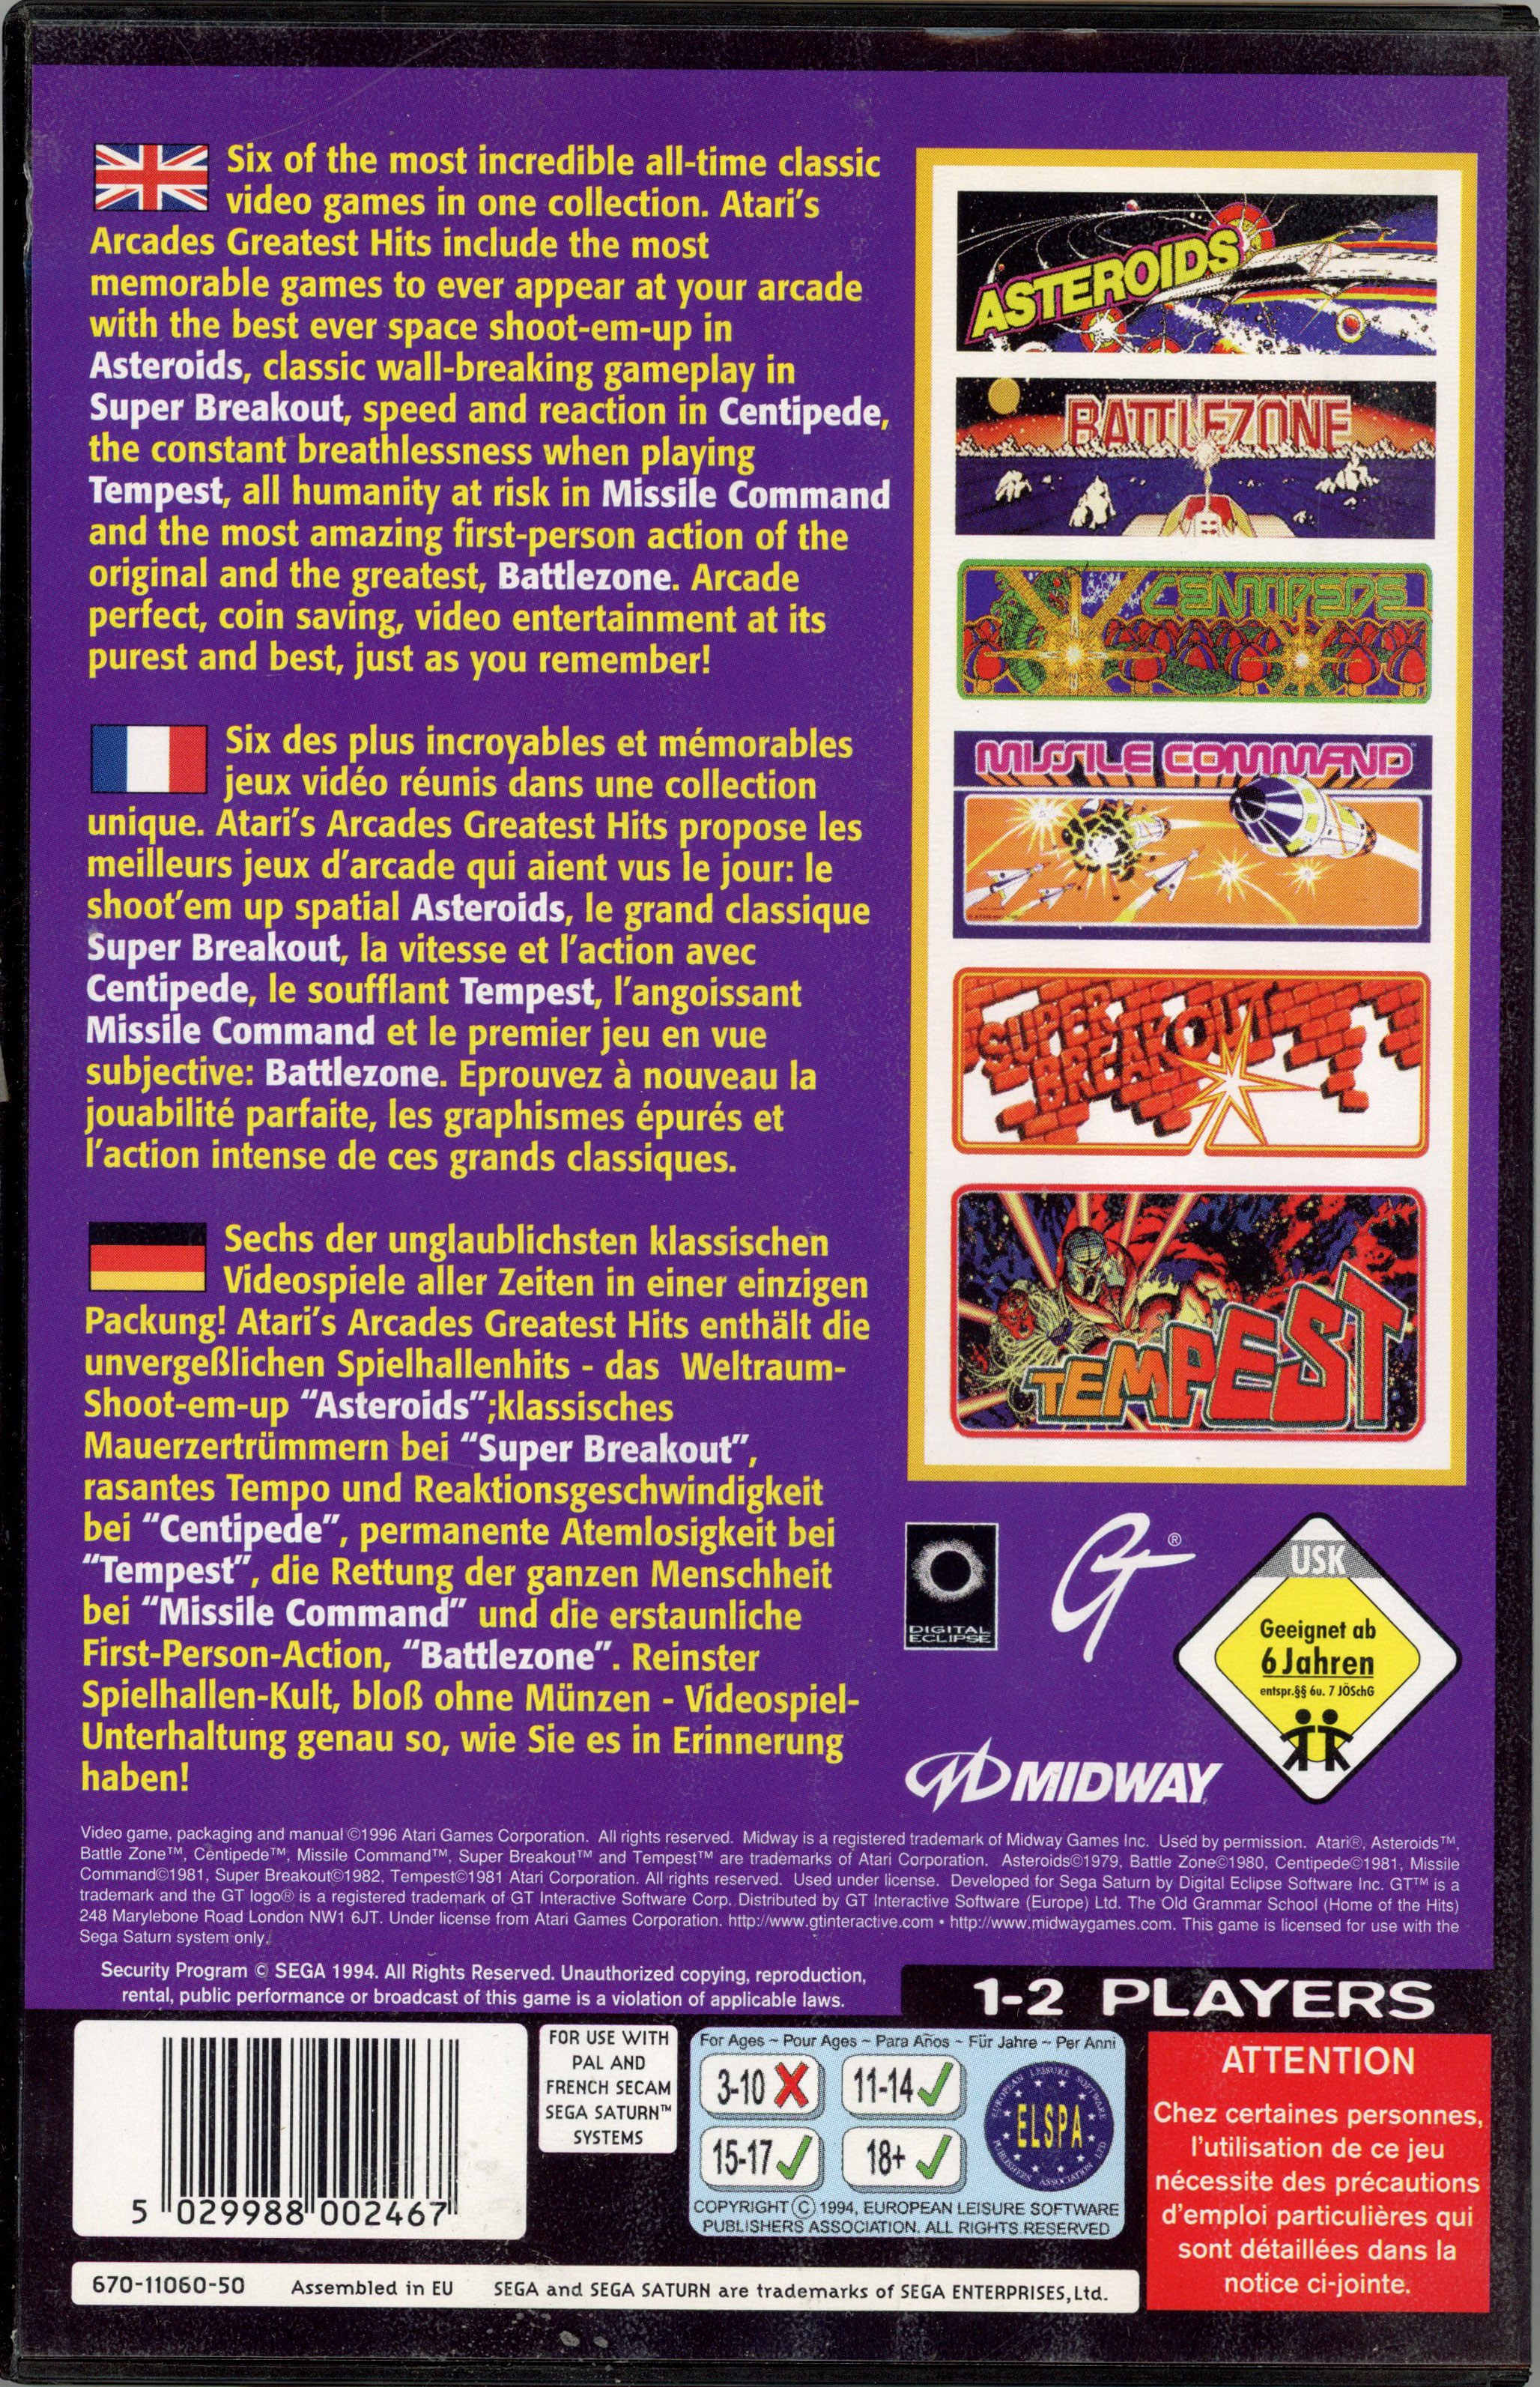 Sega - Arcade's Greatest Hits - The Atari Collection 1 - Sega Saturn - Unused/Brand New - Image 2 of 2